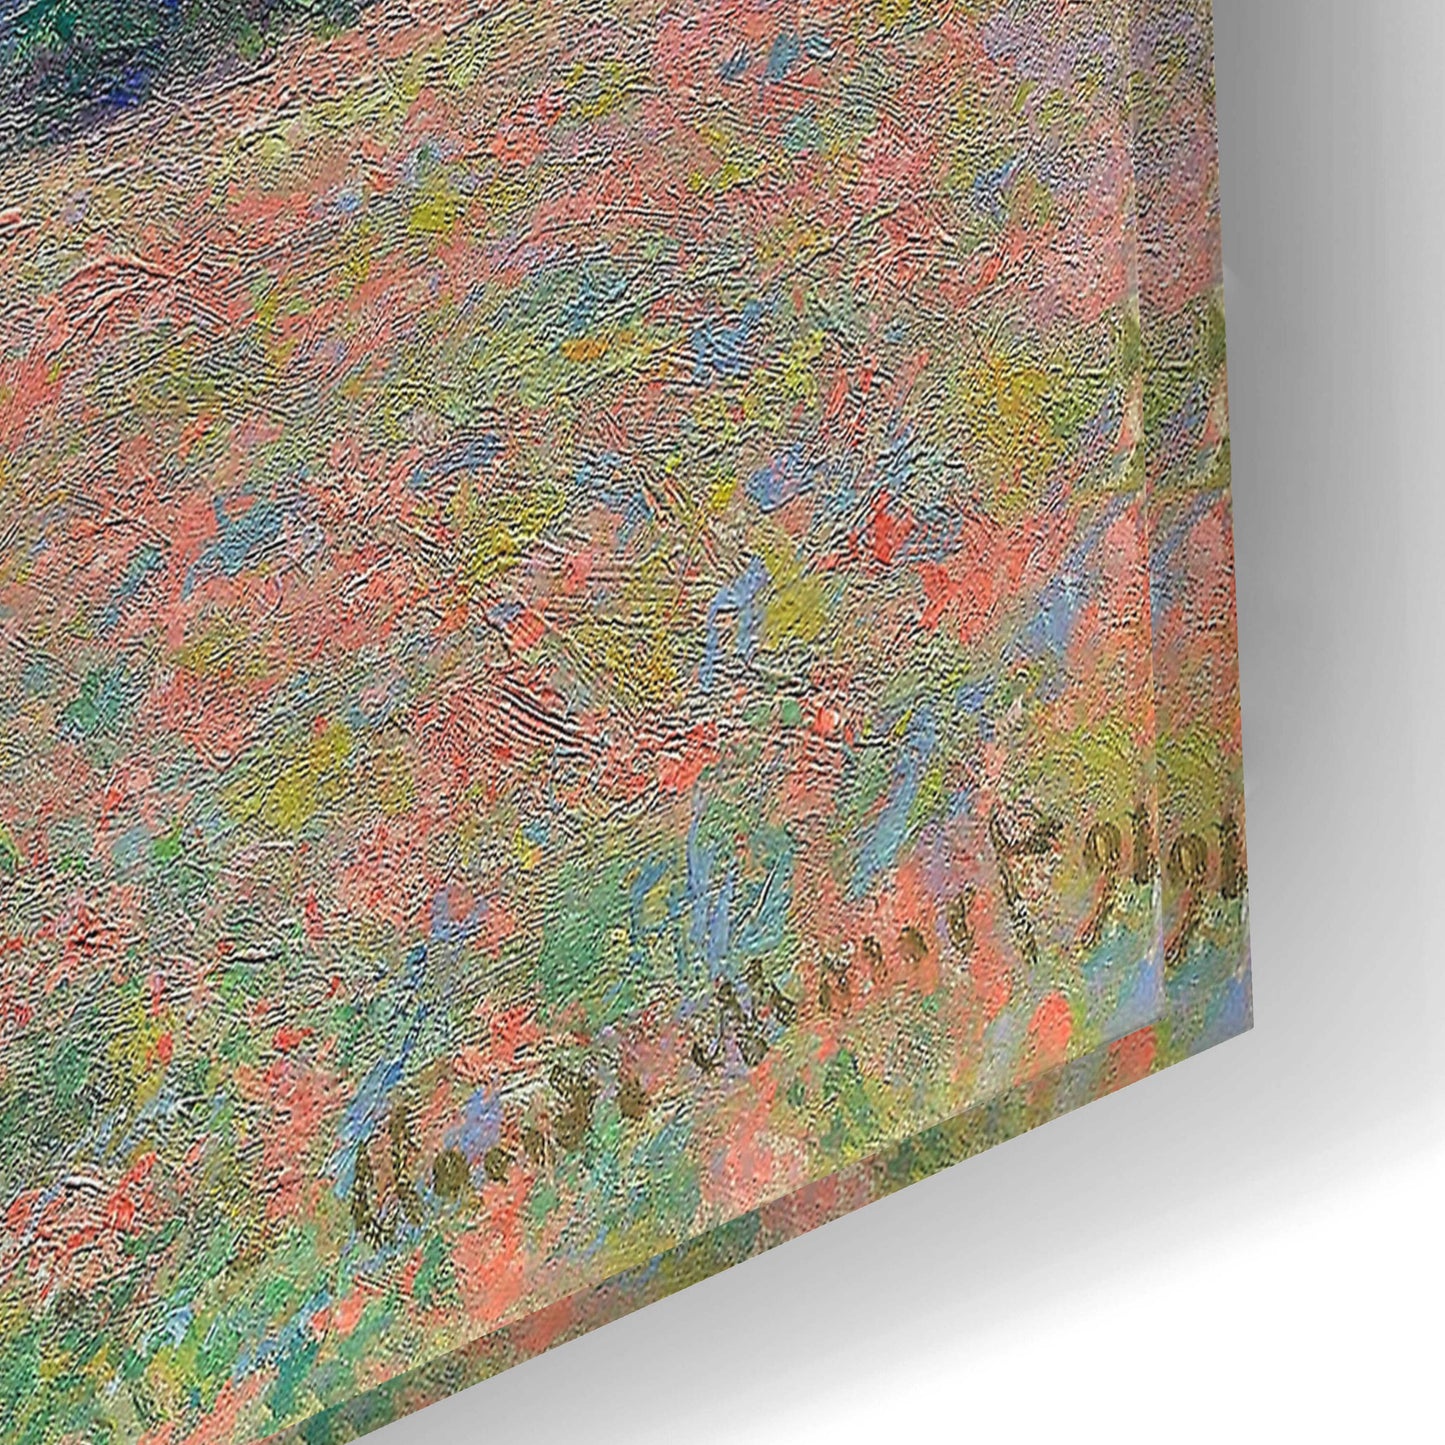 Epic Art 'Poppy Field (Giverny)' by Claude Monet, Acrylic Glass Wall Art,24x16